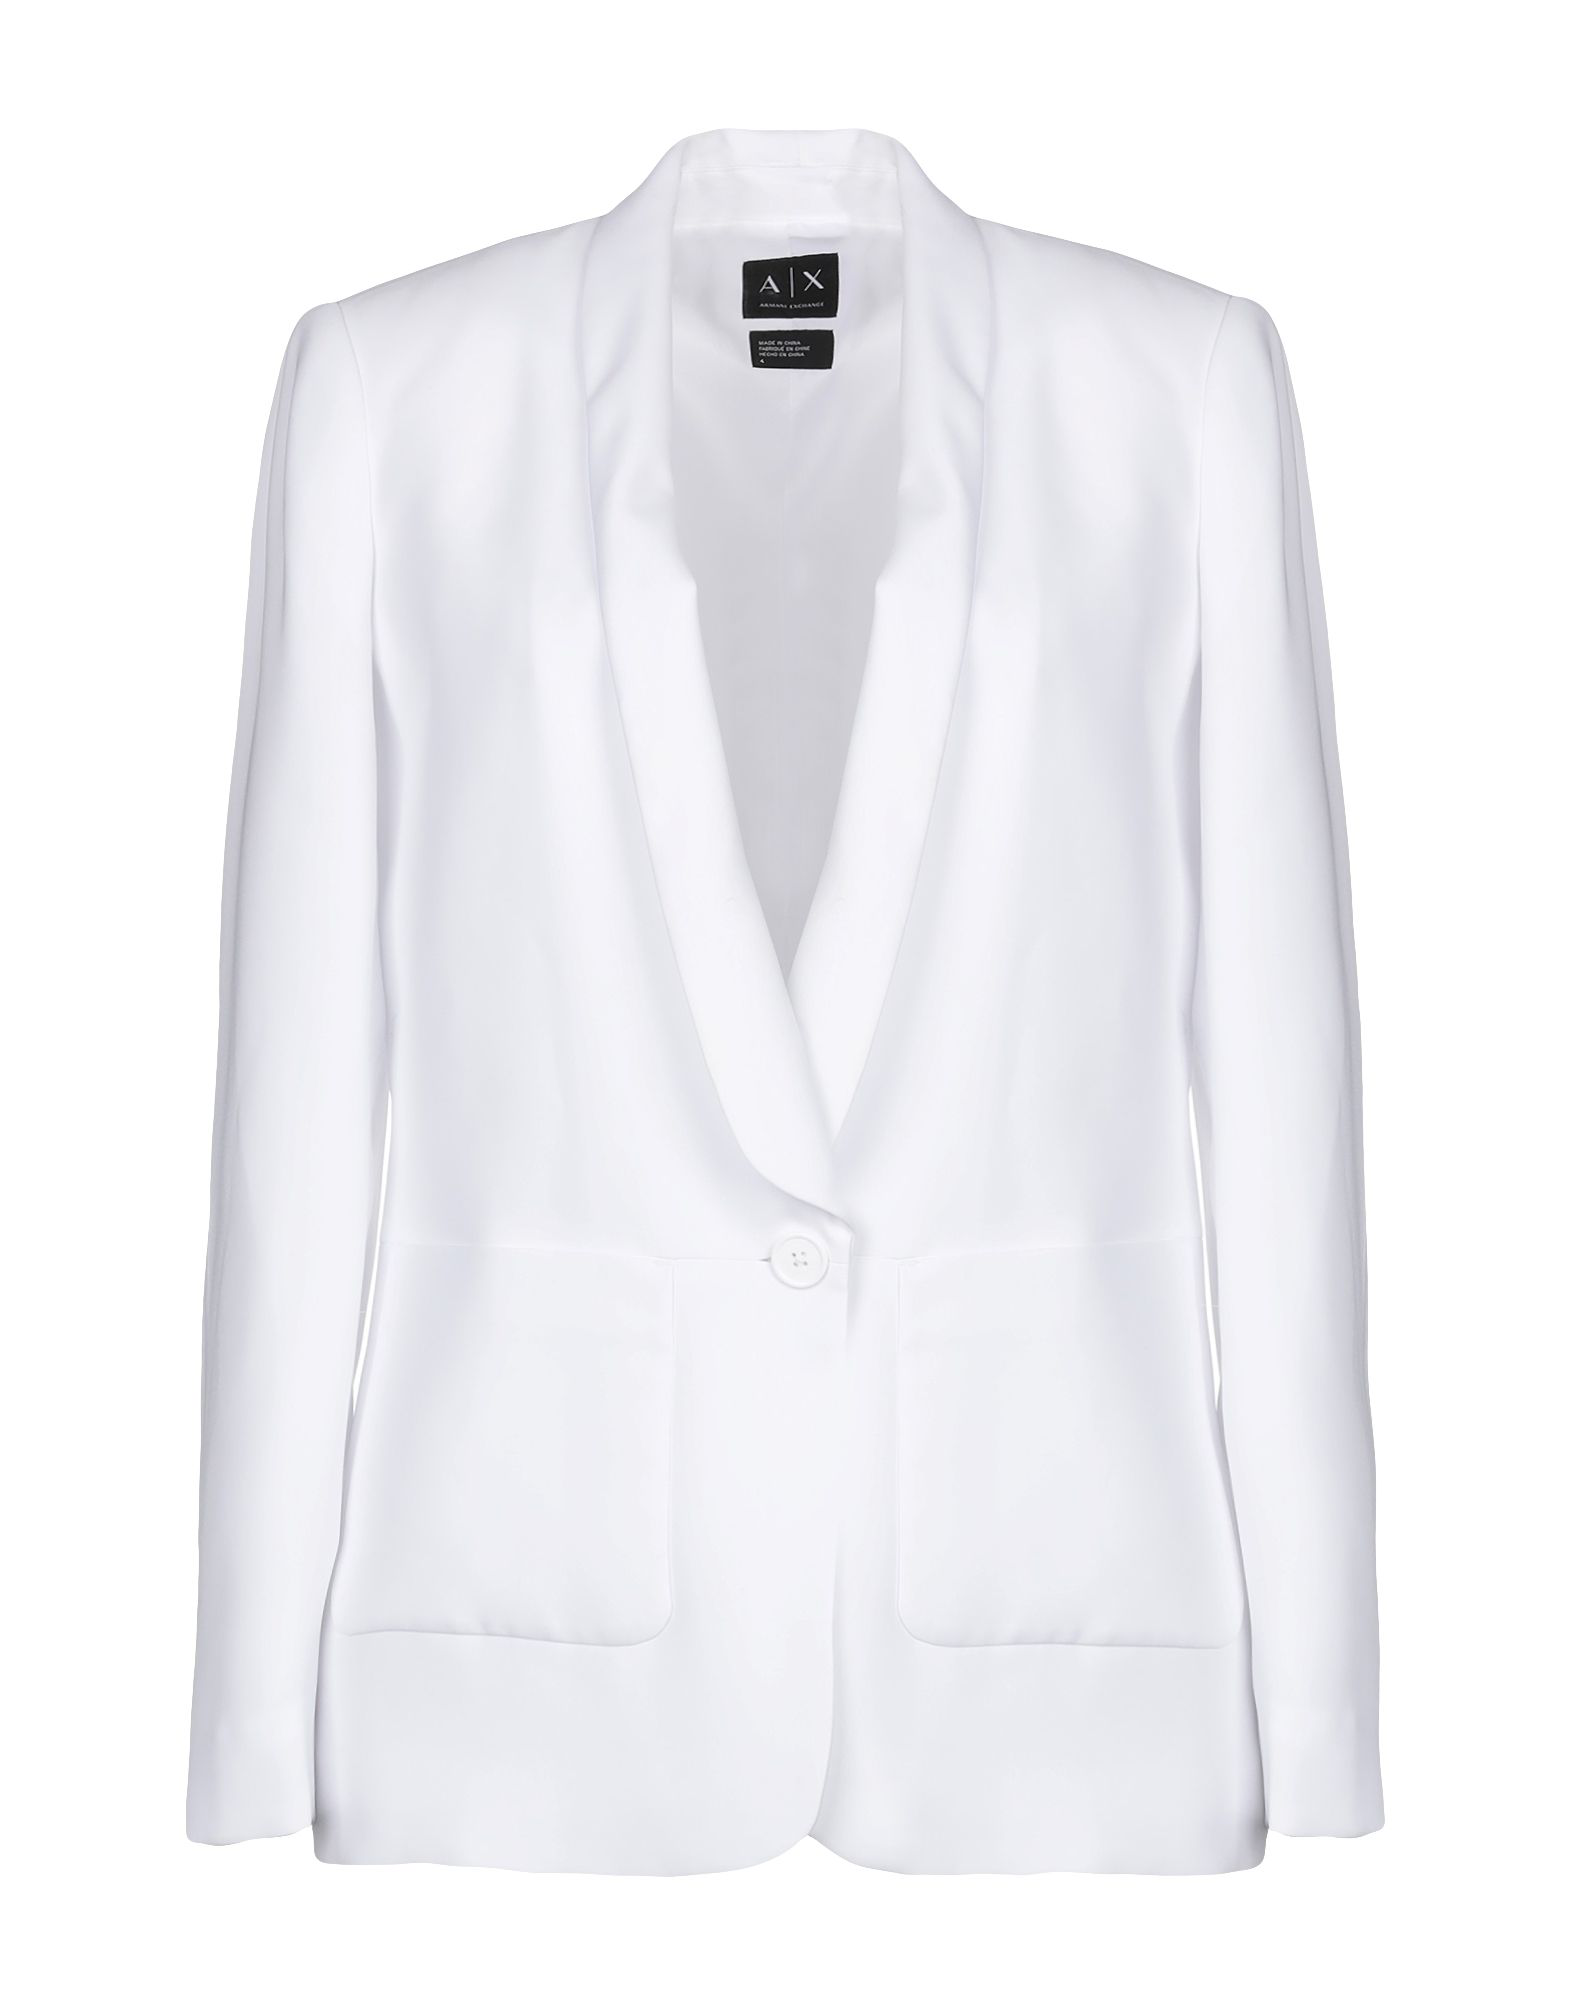 armani exchange jacket white